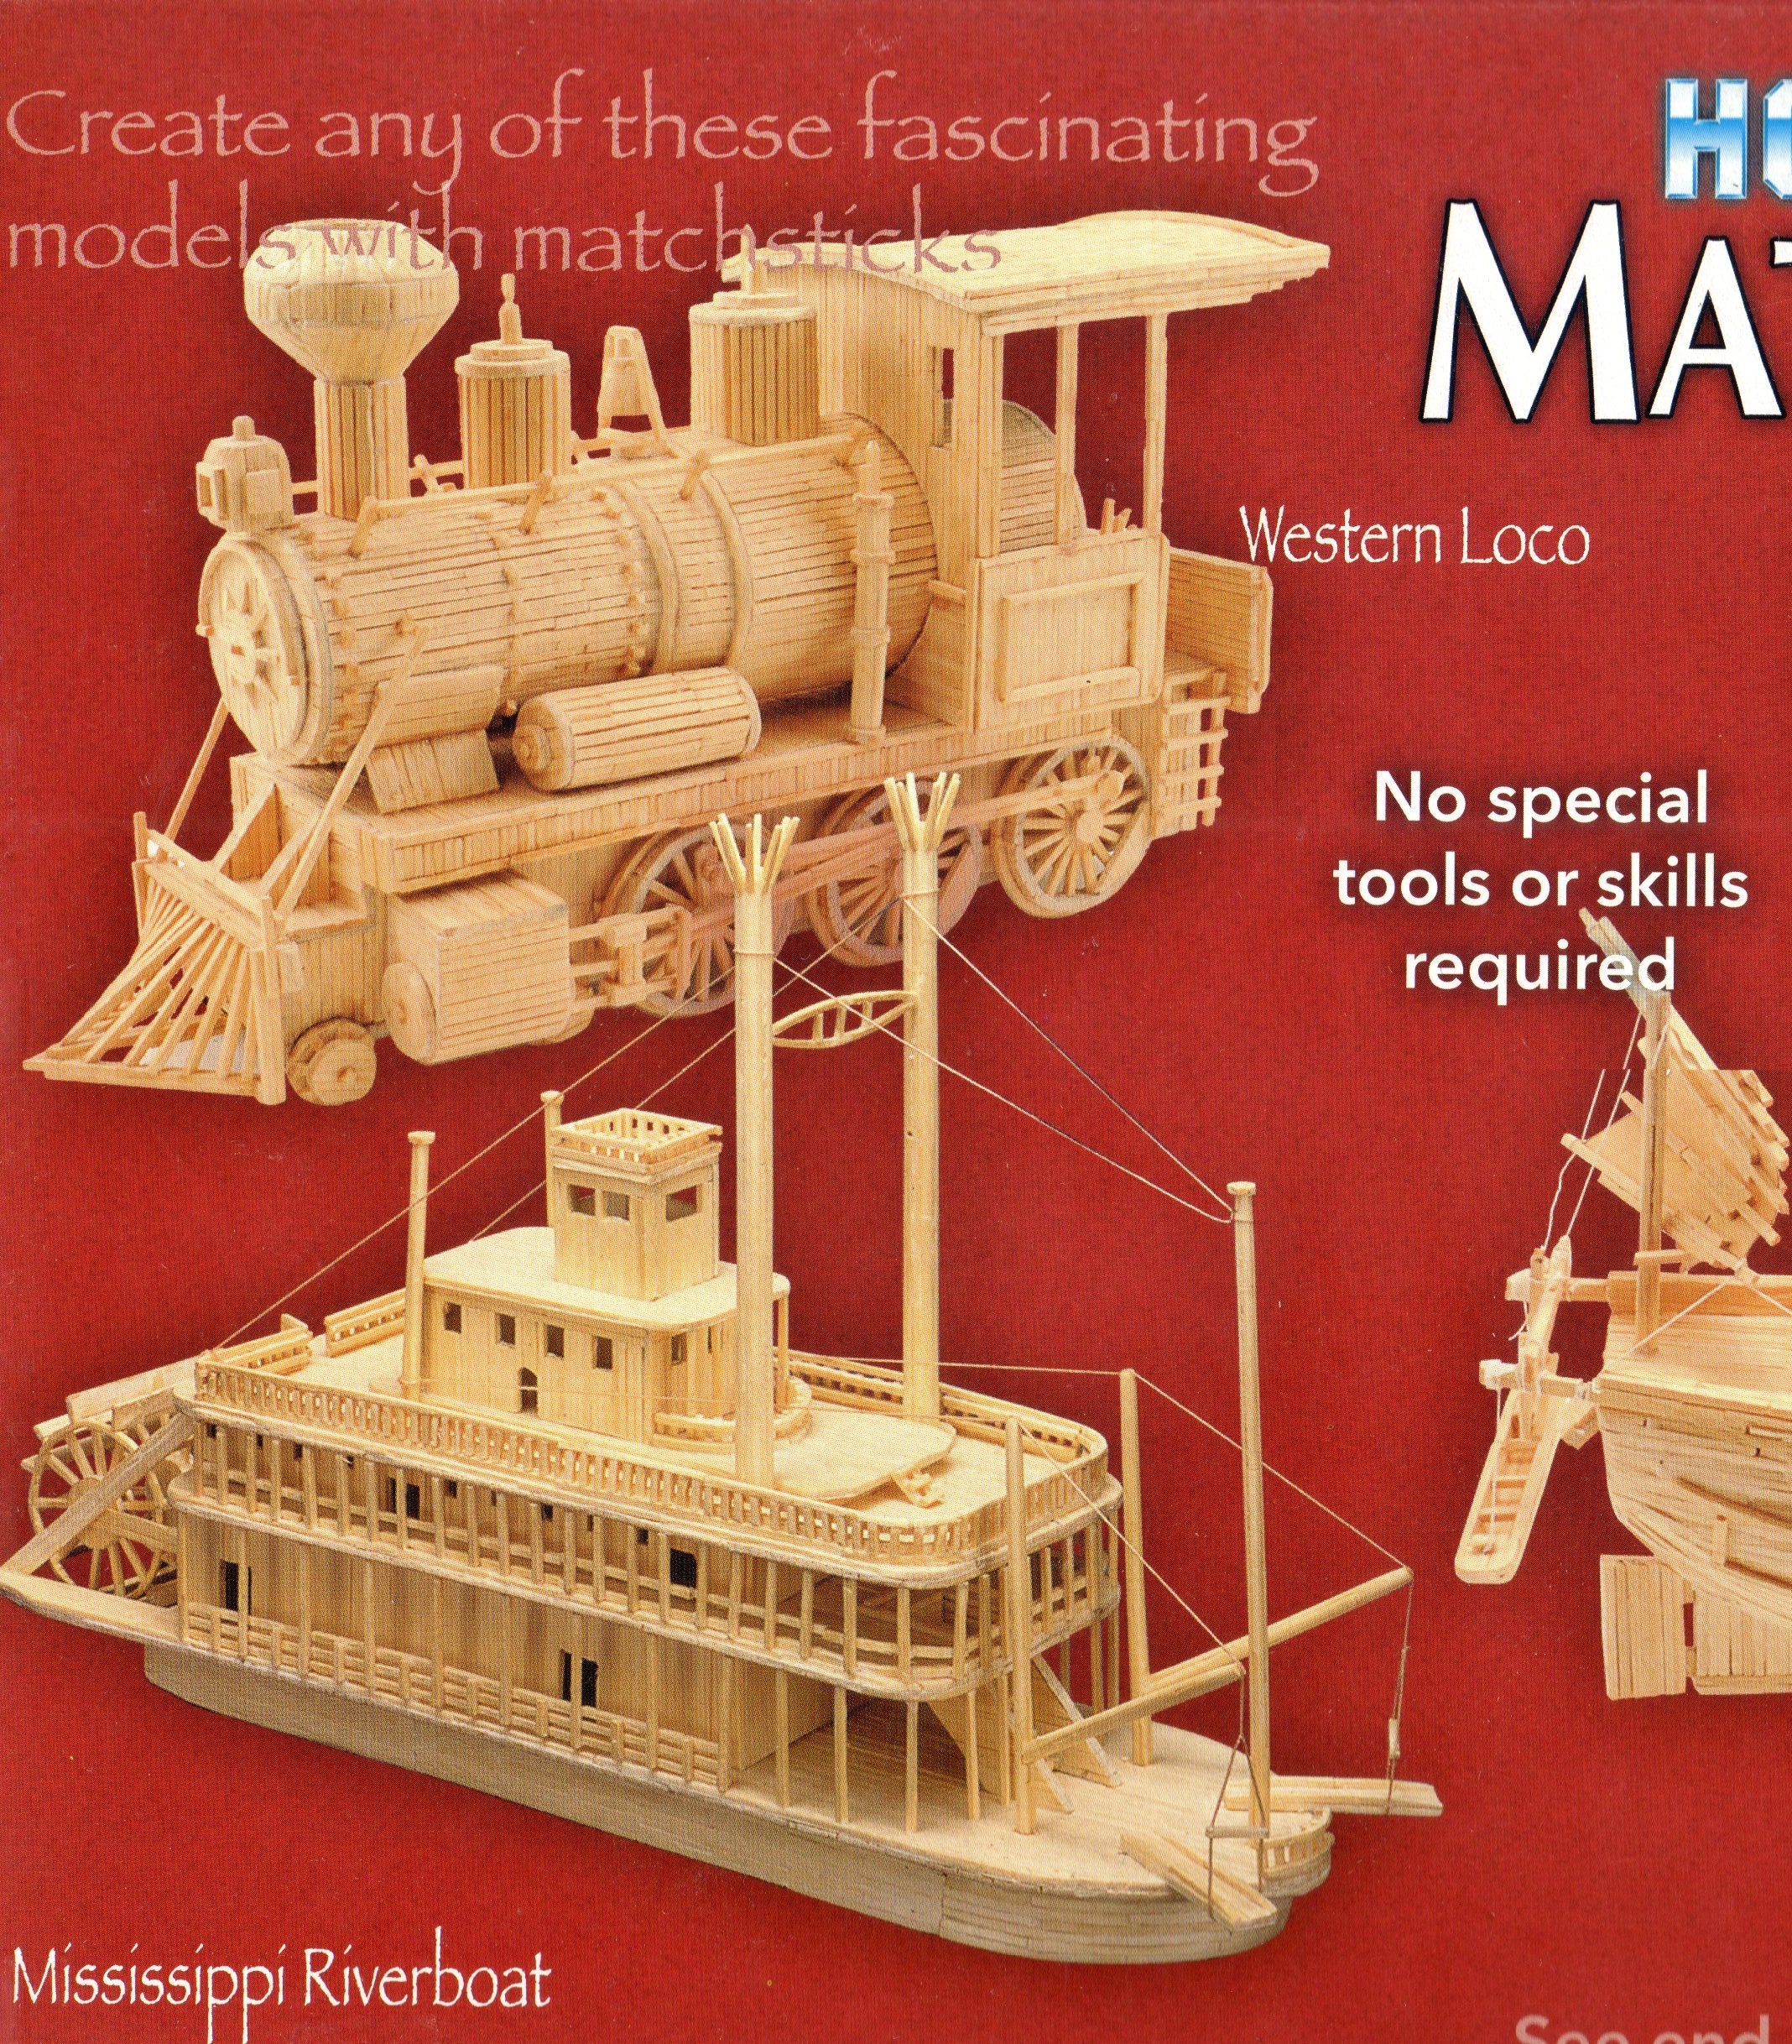 Matchmaker NEW WESTERN LOCO matchstick model Train construction kit 